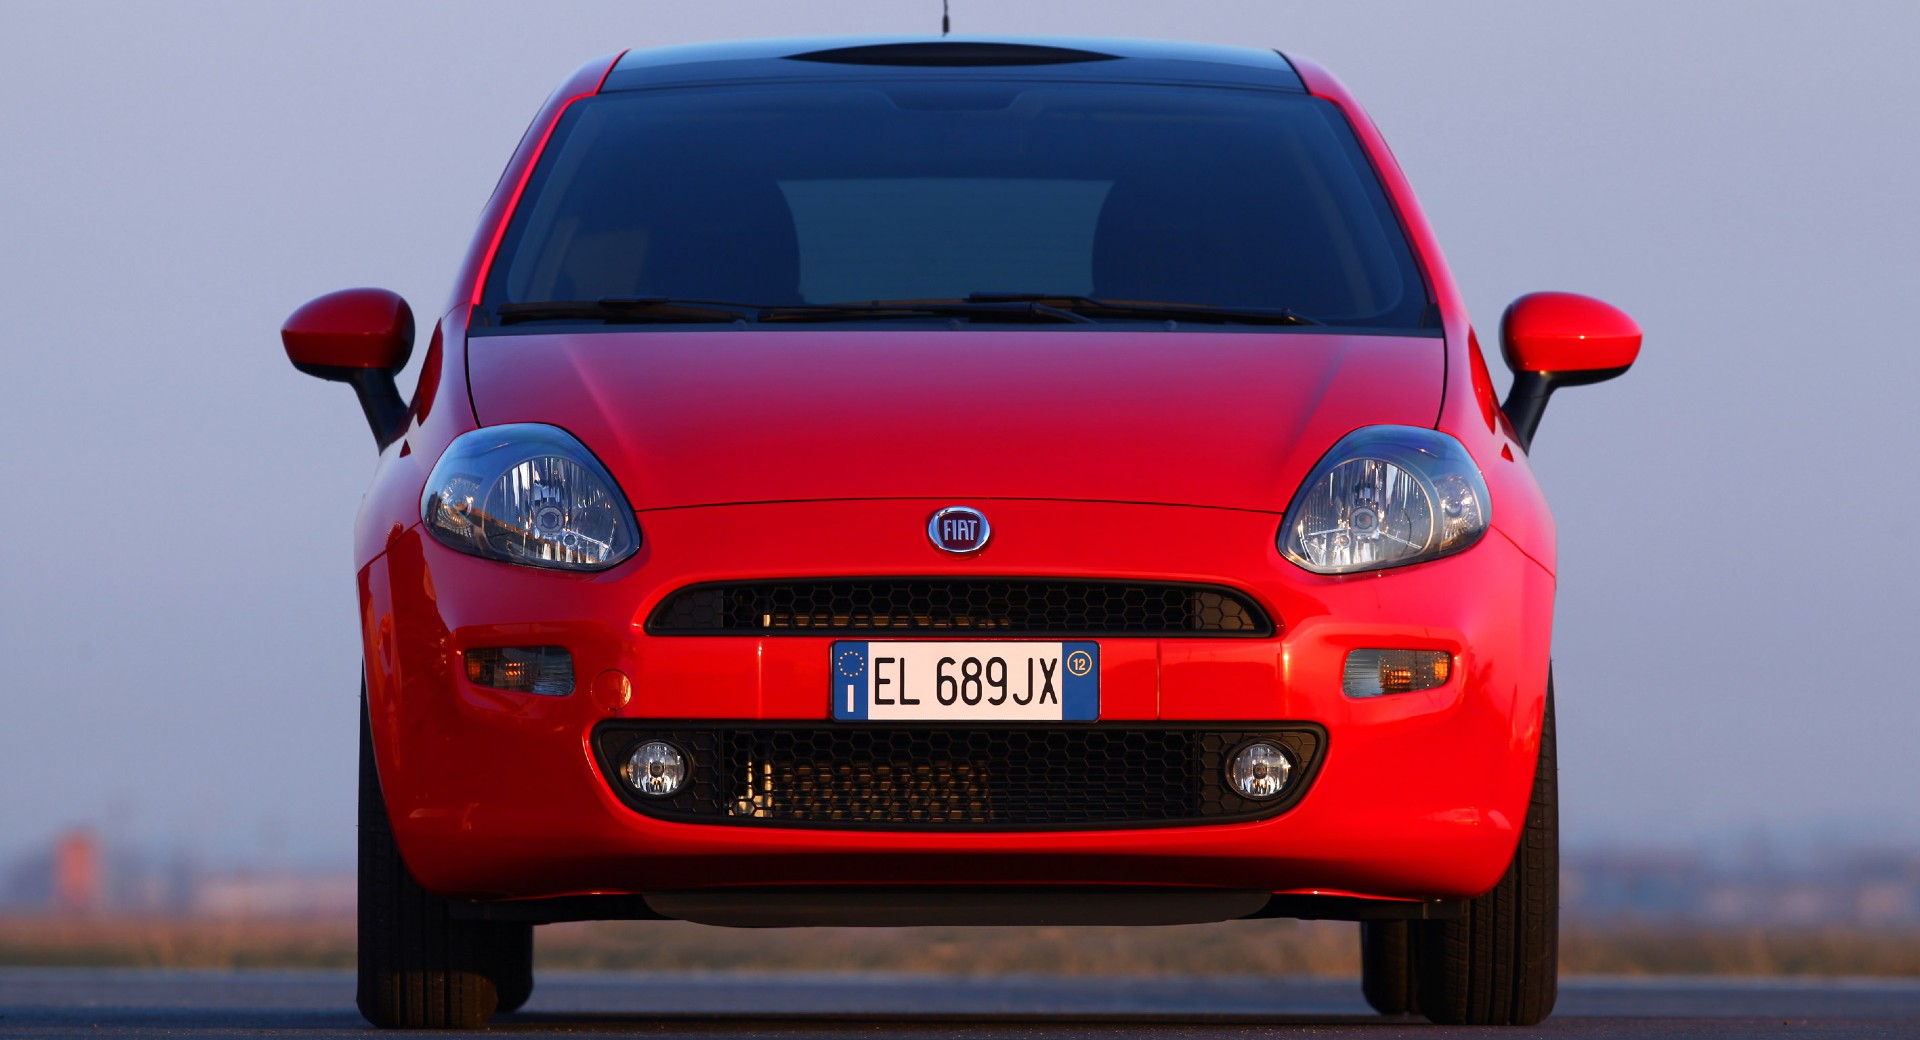 https://www.carscoops.com/wp-content/uploads/2021/08/2012-Fiat-Punto-main.jpg